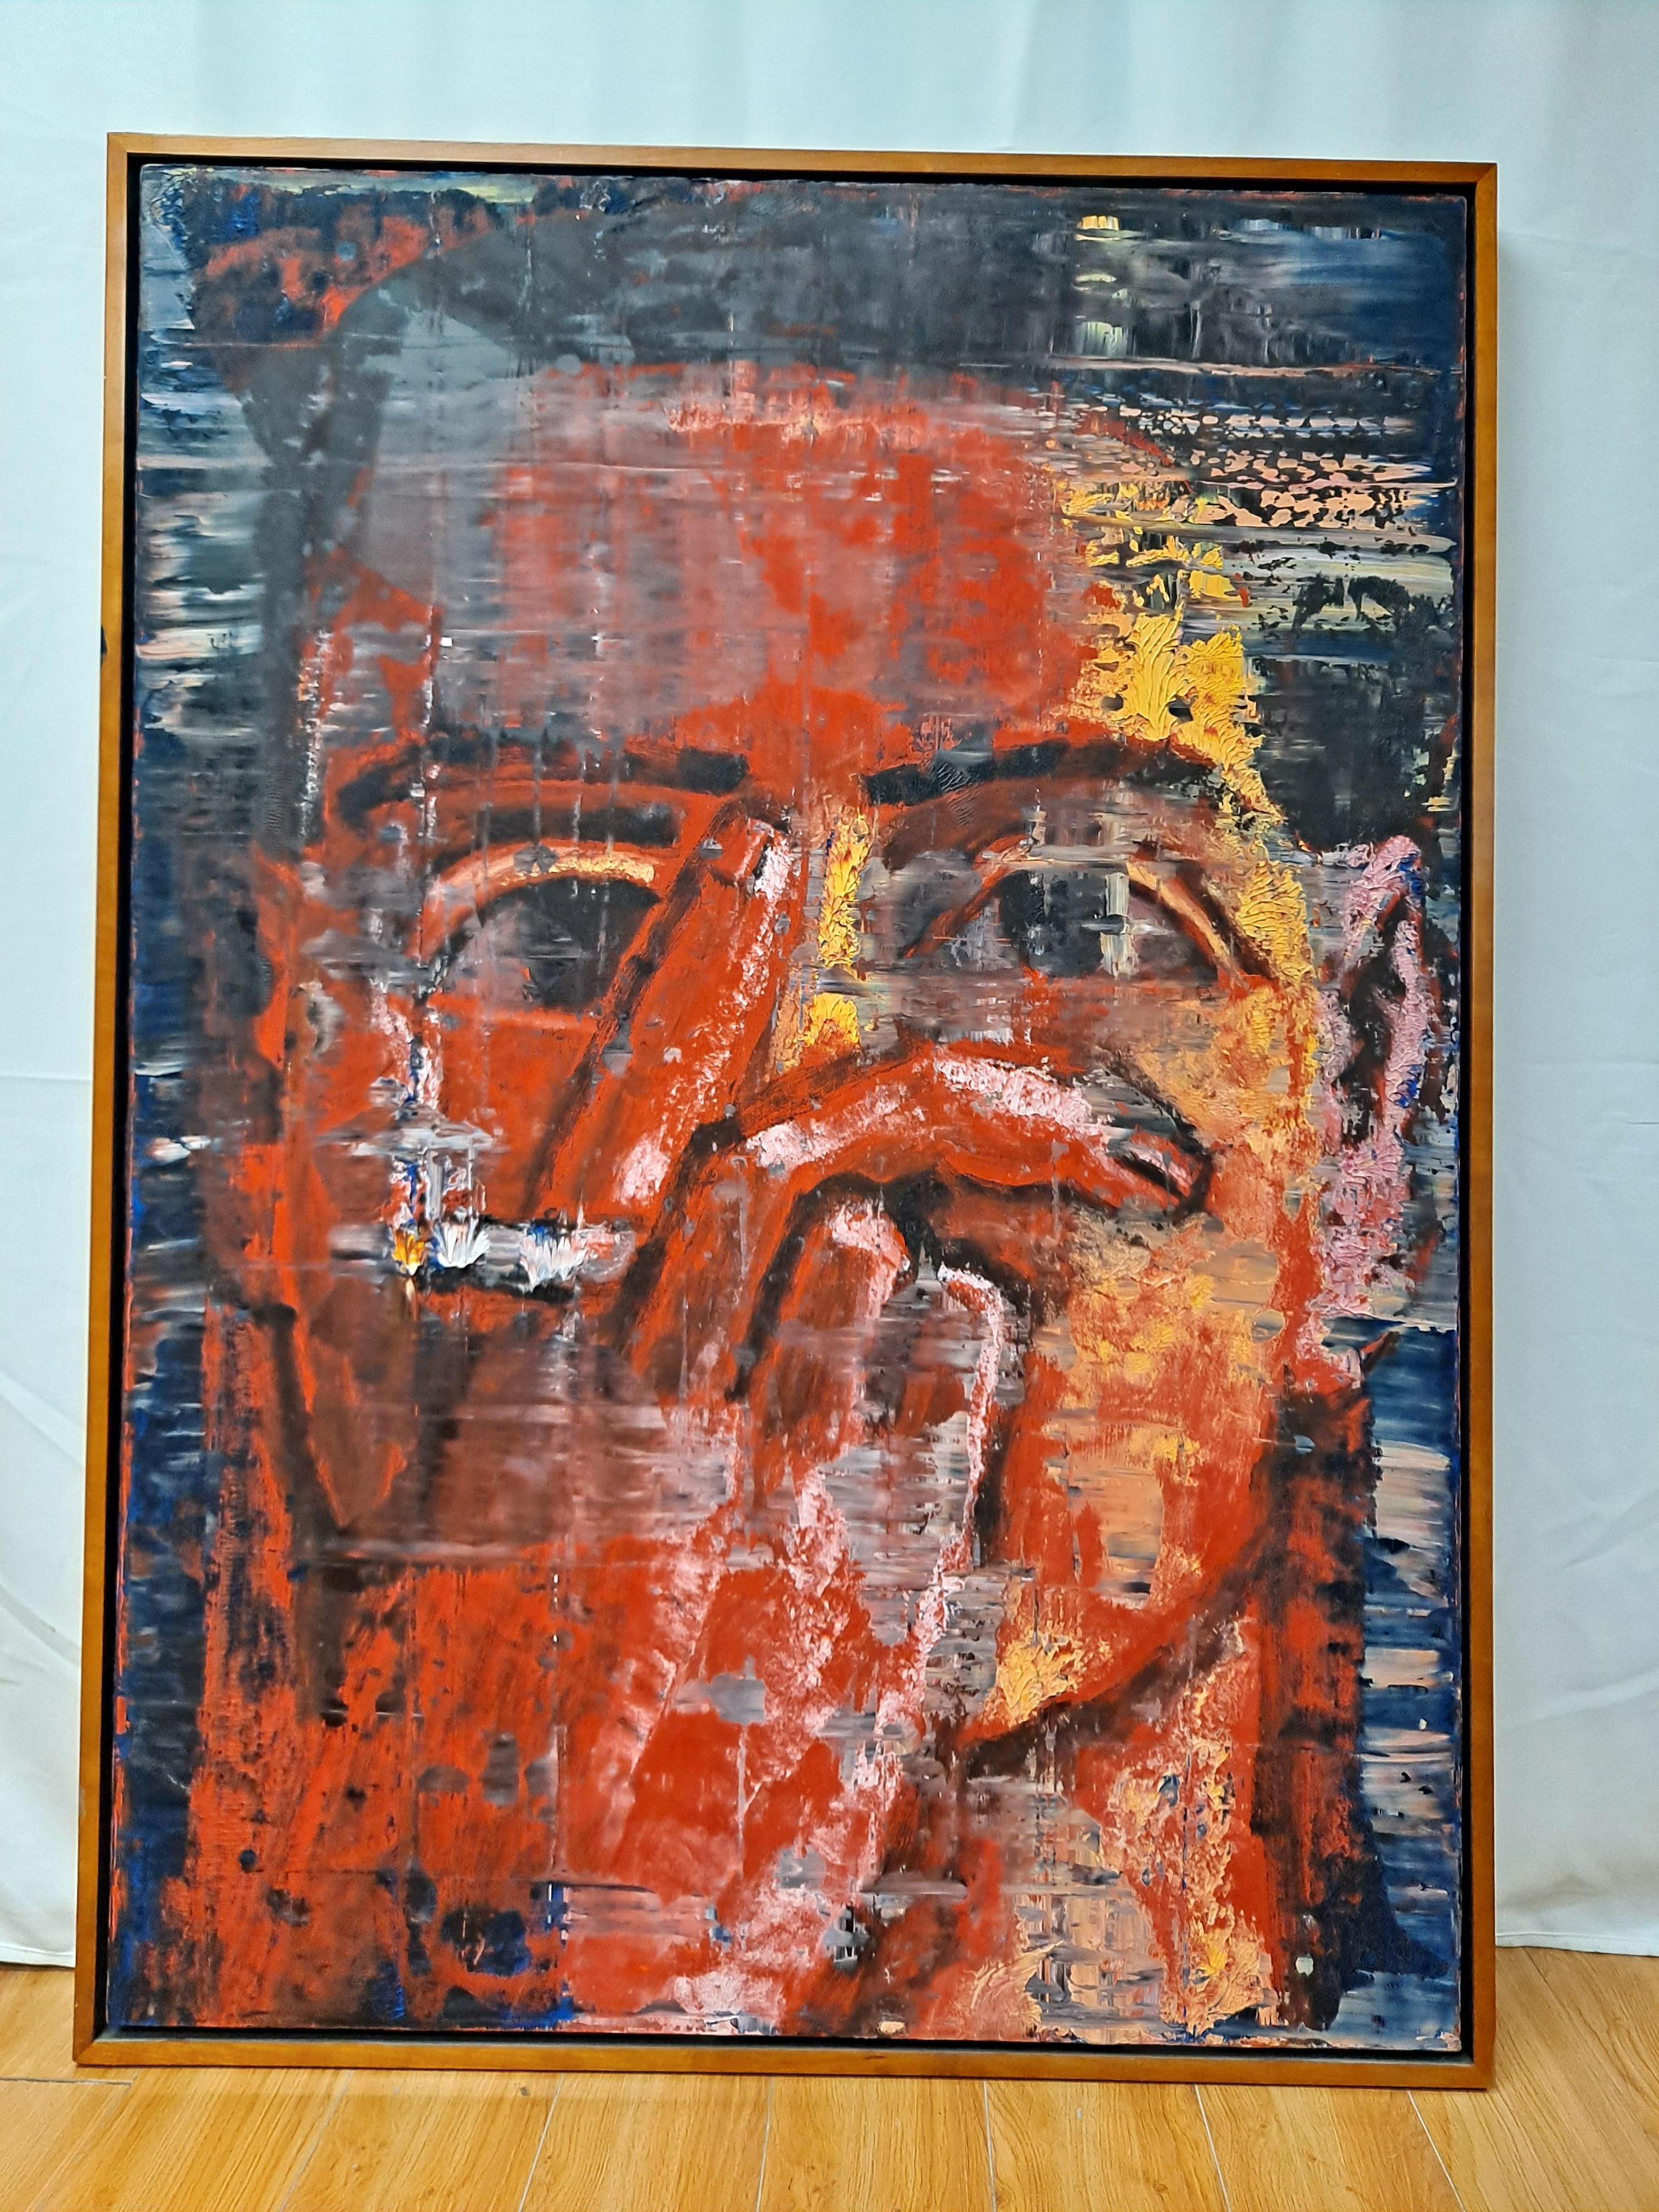 Aaron Fink (American 1955-Active) „Red Smoker“ Ölgemälde auf Leinwand

1986